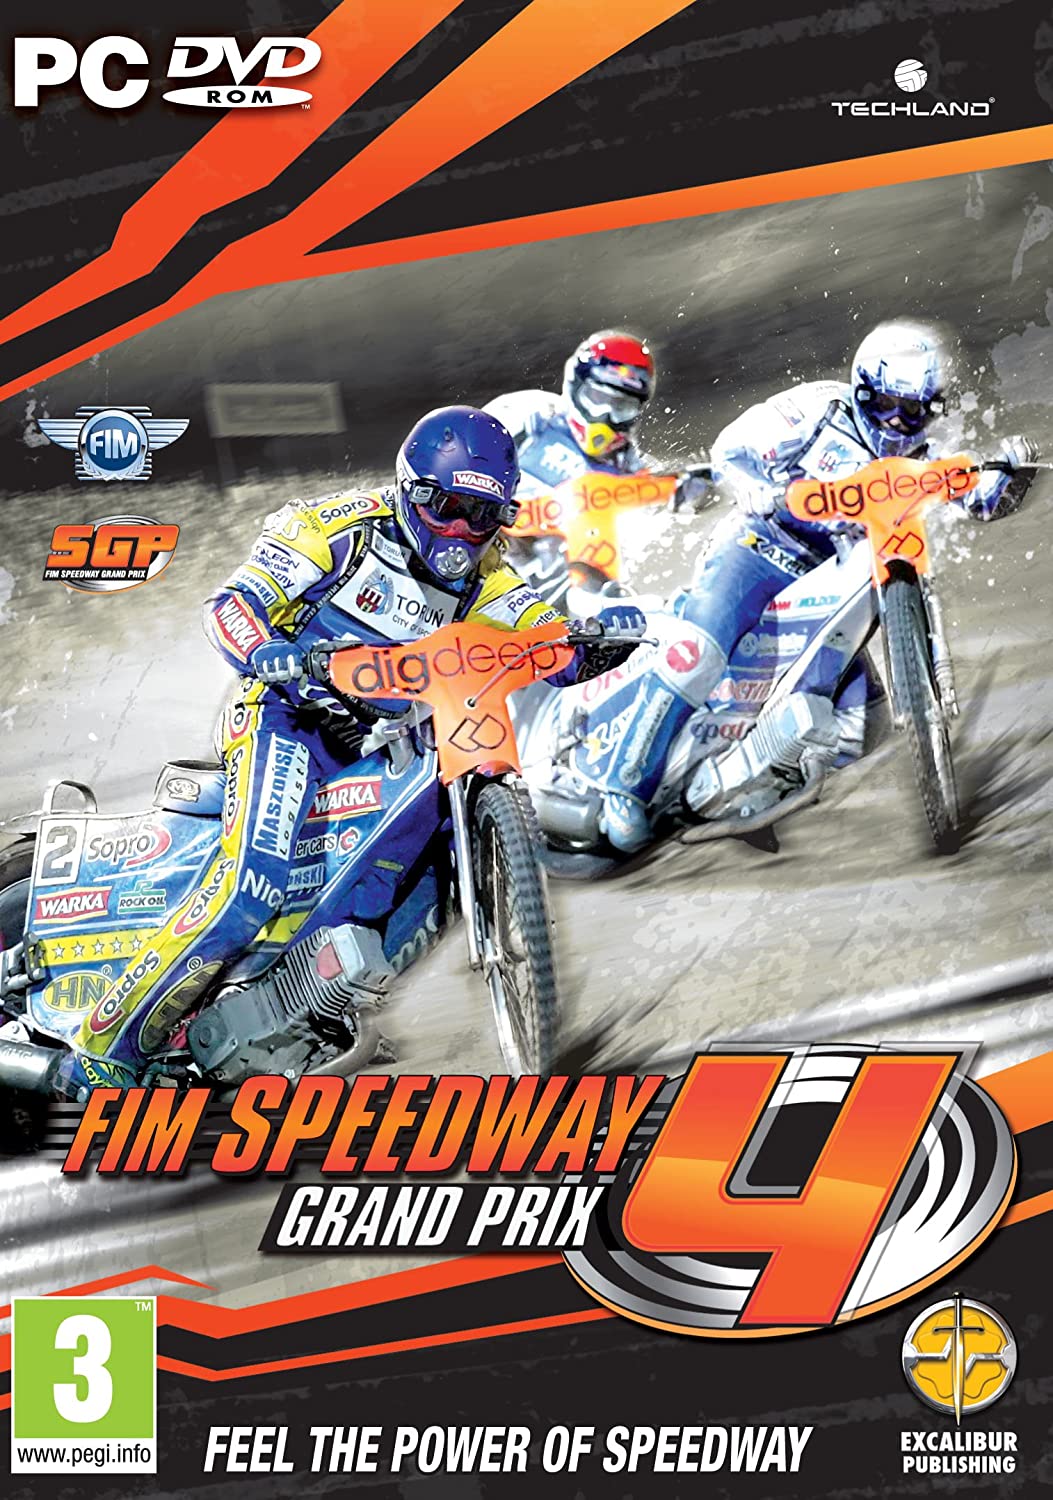  Download Fim Speedway Grand Prix 4 Game Full Version